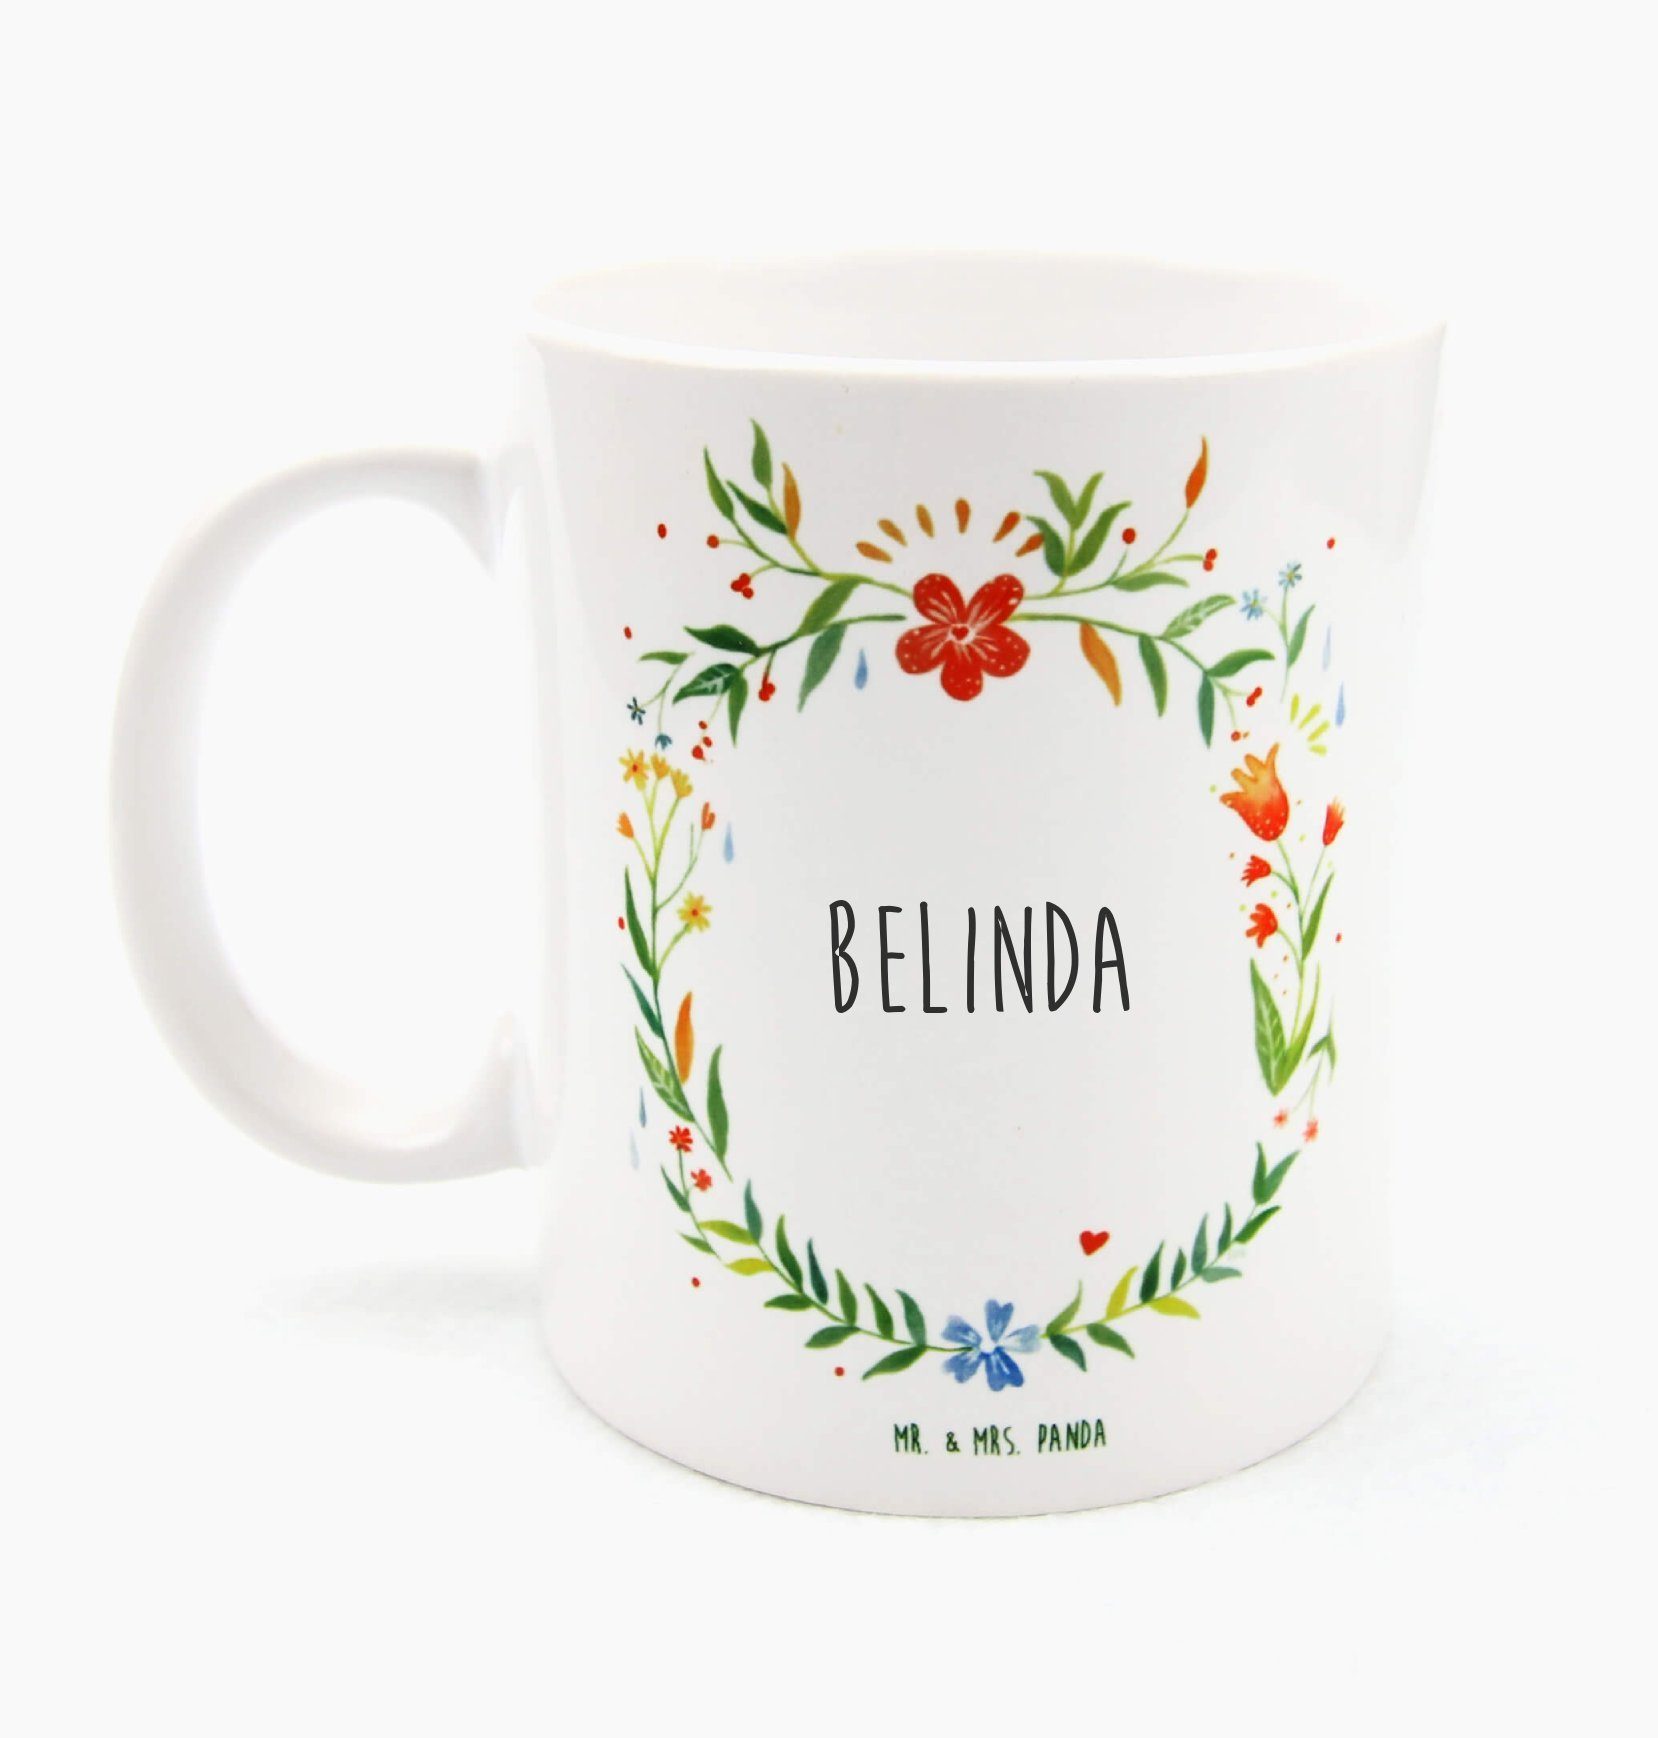 Mr. & Mrs. Panda Tasse Belinda - Geschenk, Teetasse, Becher, Kaffeetasse, Teebecher, Büro Ta, Keramik